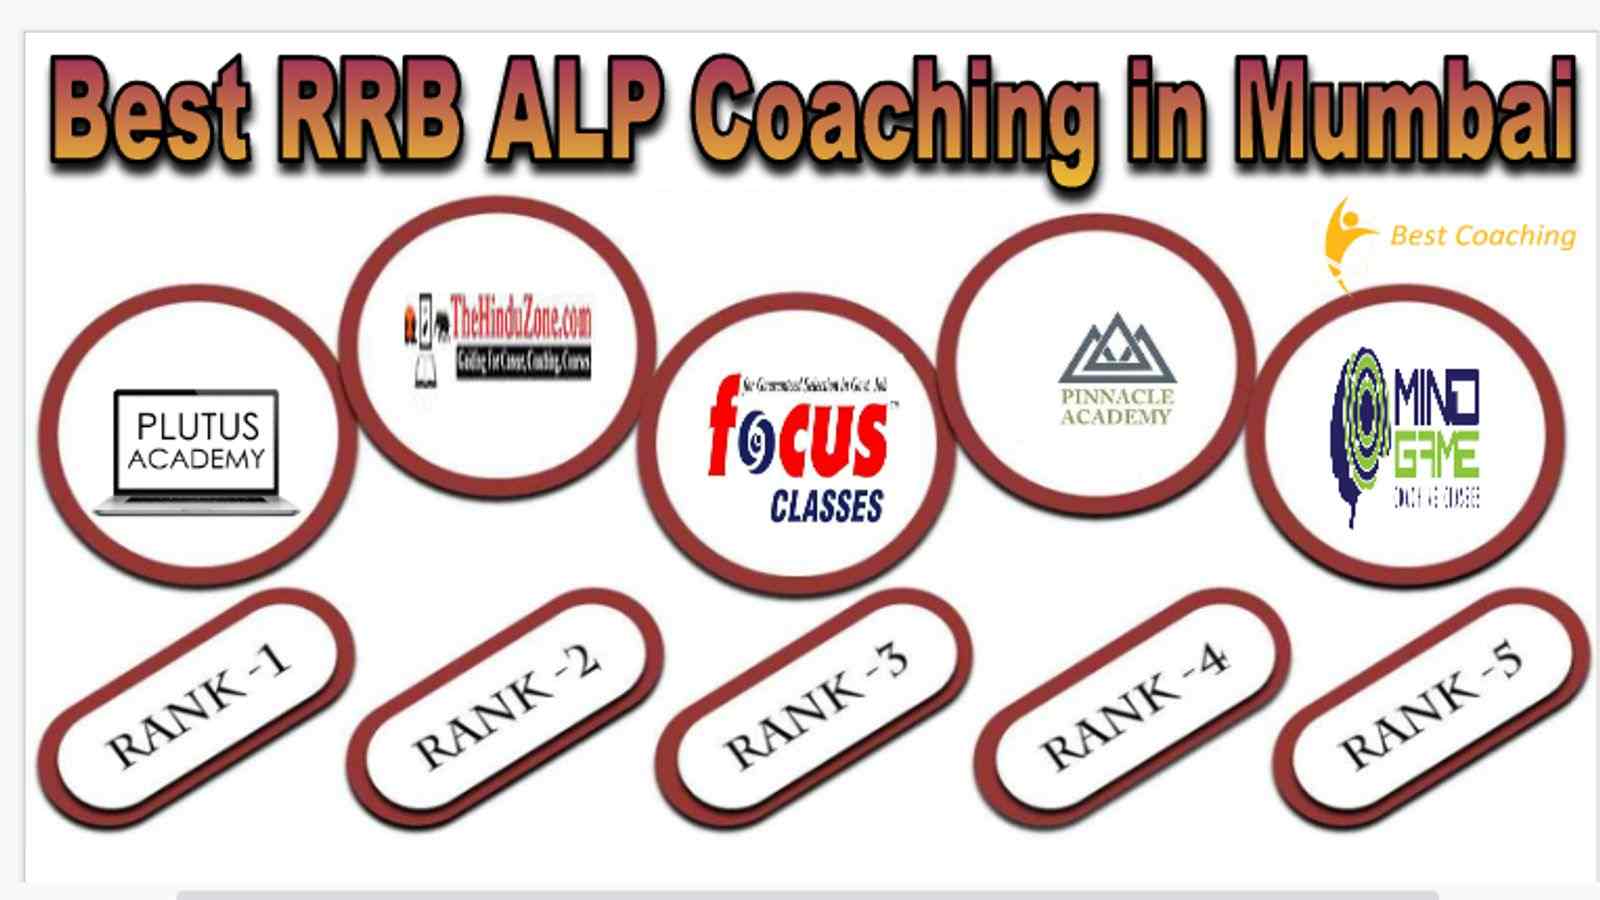 Best RRB ALP Coaching in Mumbai